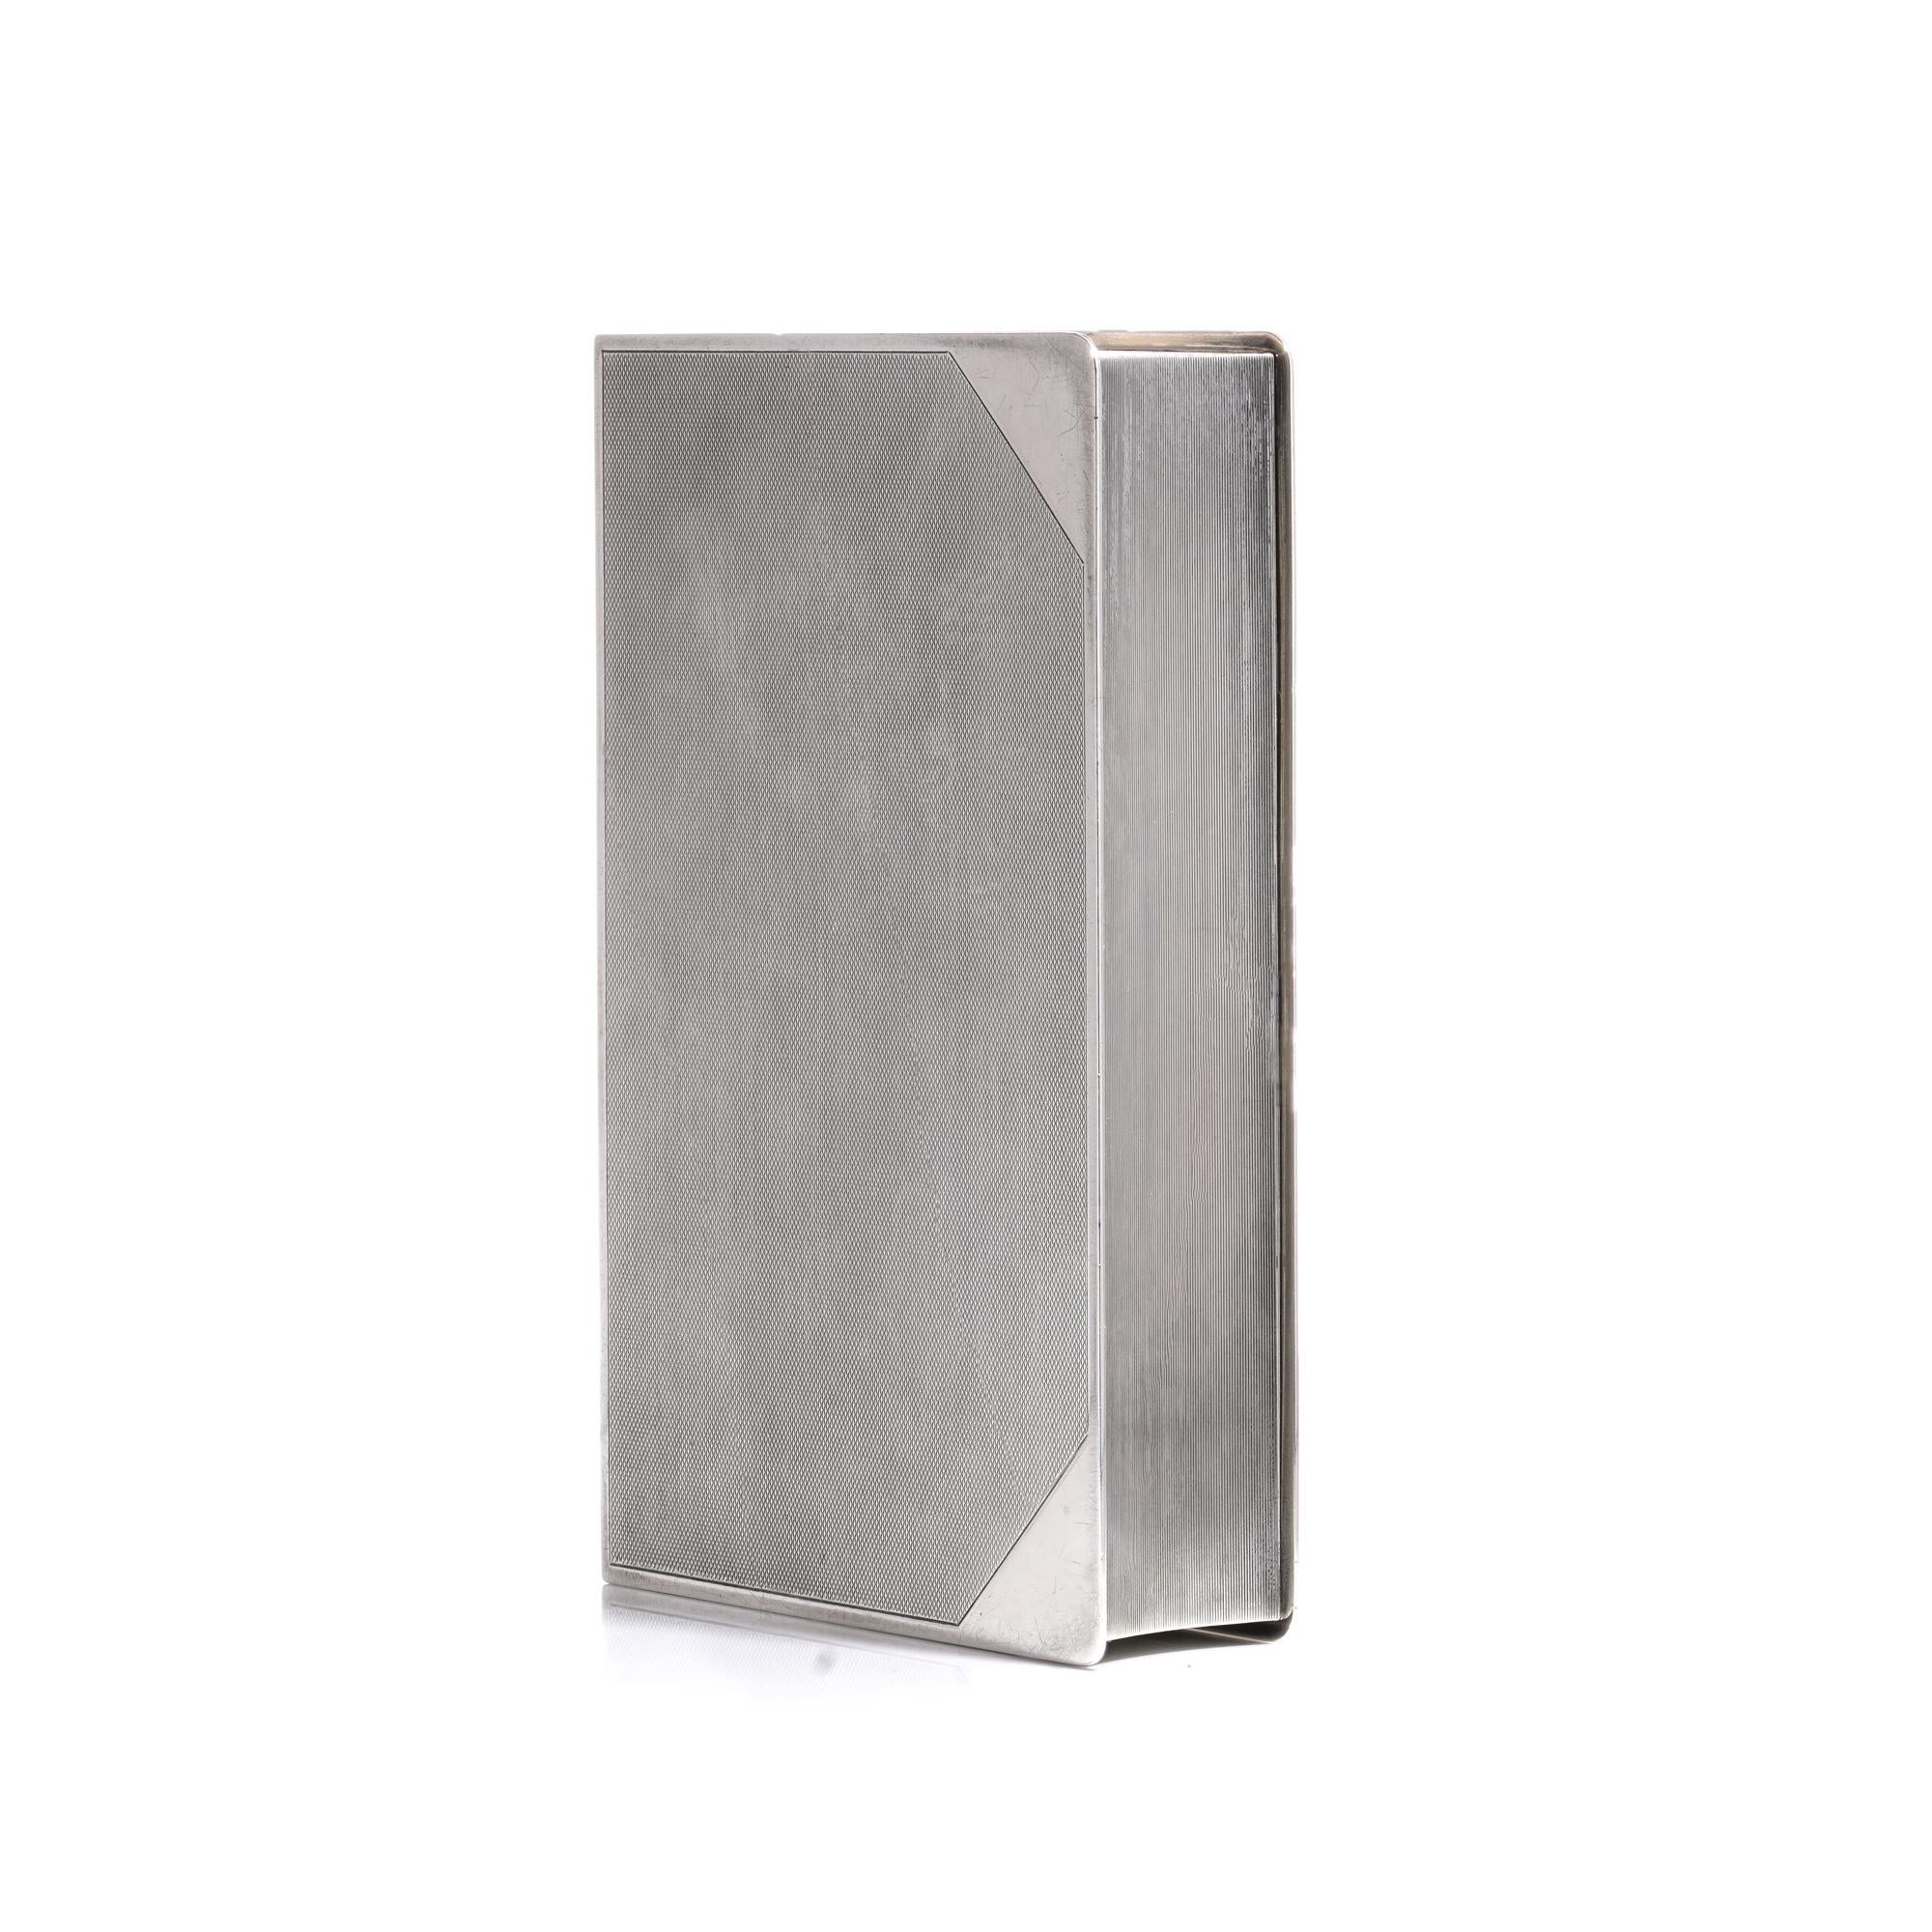 Art Deco sterling silver sandwich/cigarette box by William Base & Sons For Sale 3